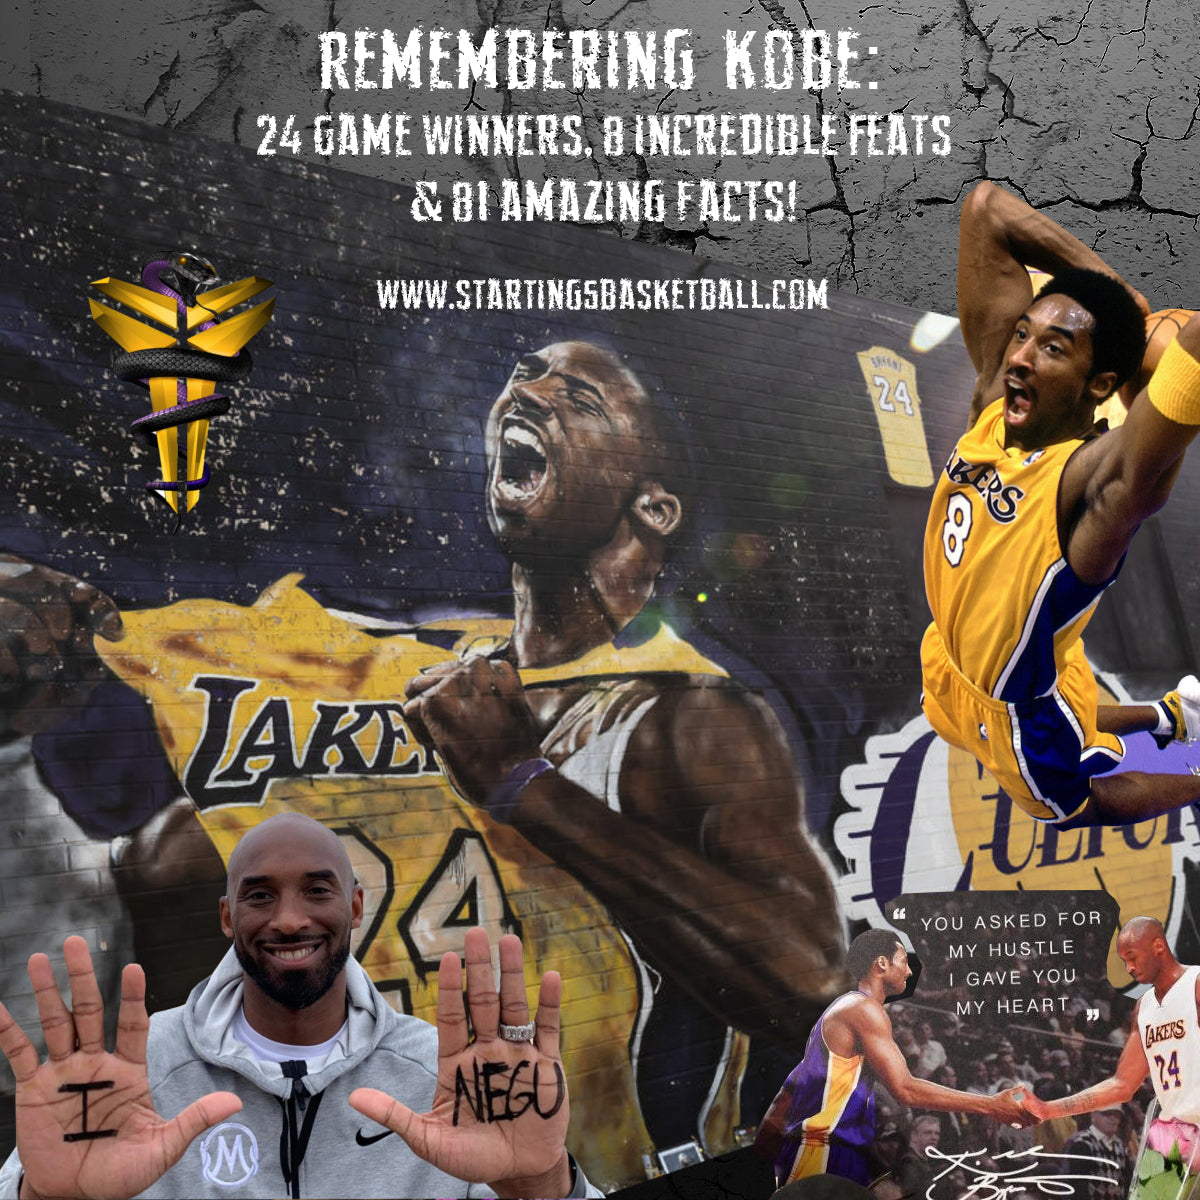 NBA Finals MVP Award Winners From 2001 To 2010: Shaq, Kobe And Duncan  Dominated This Era - Fadeaway World